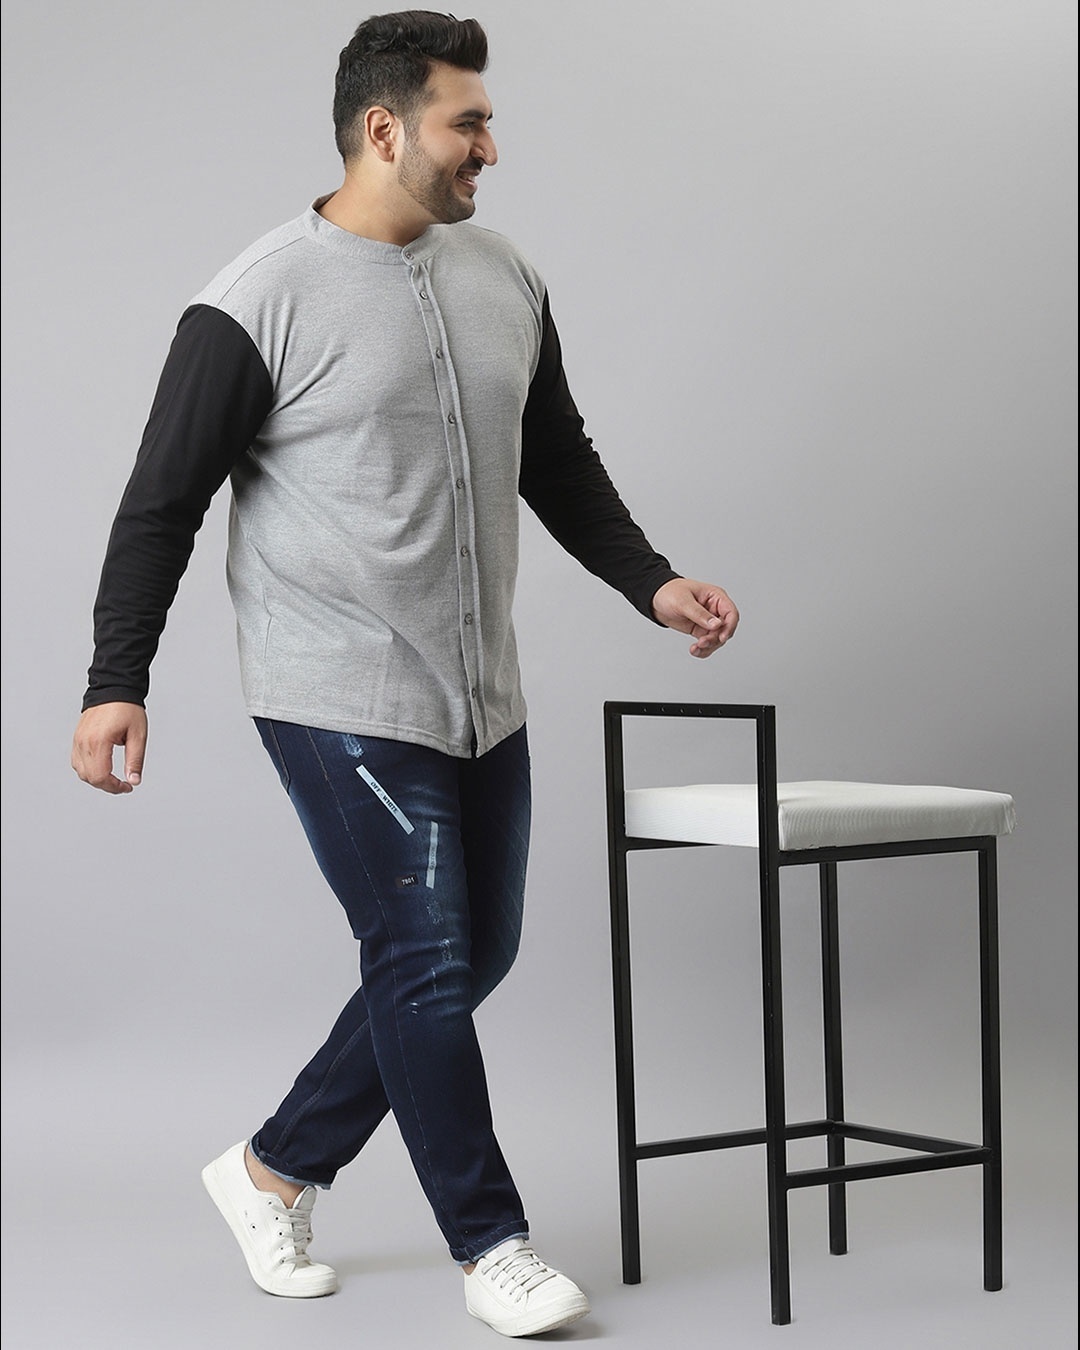 Shop Men's Grey Colorblocked Stylish Full Sleeve Casual Shirt